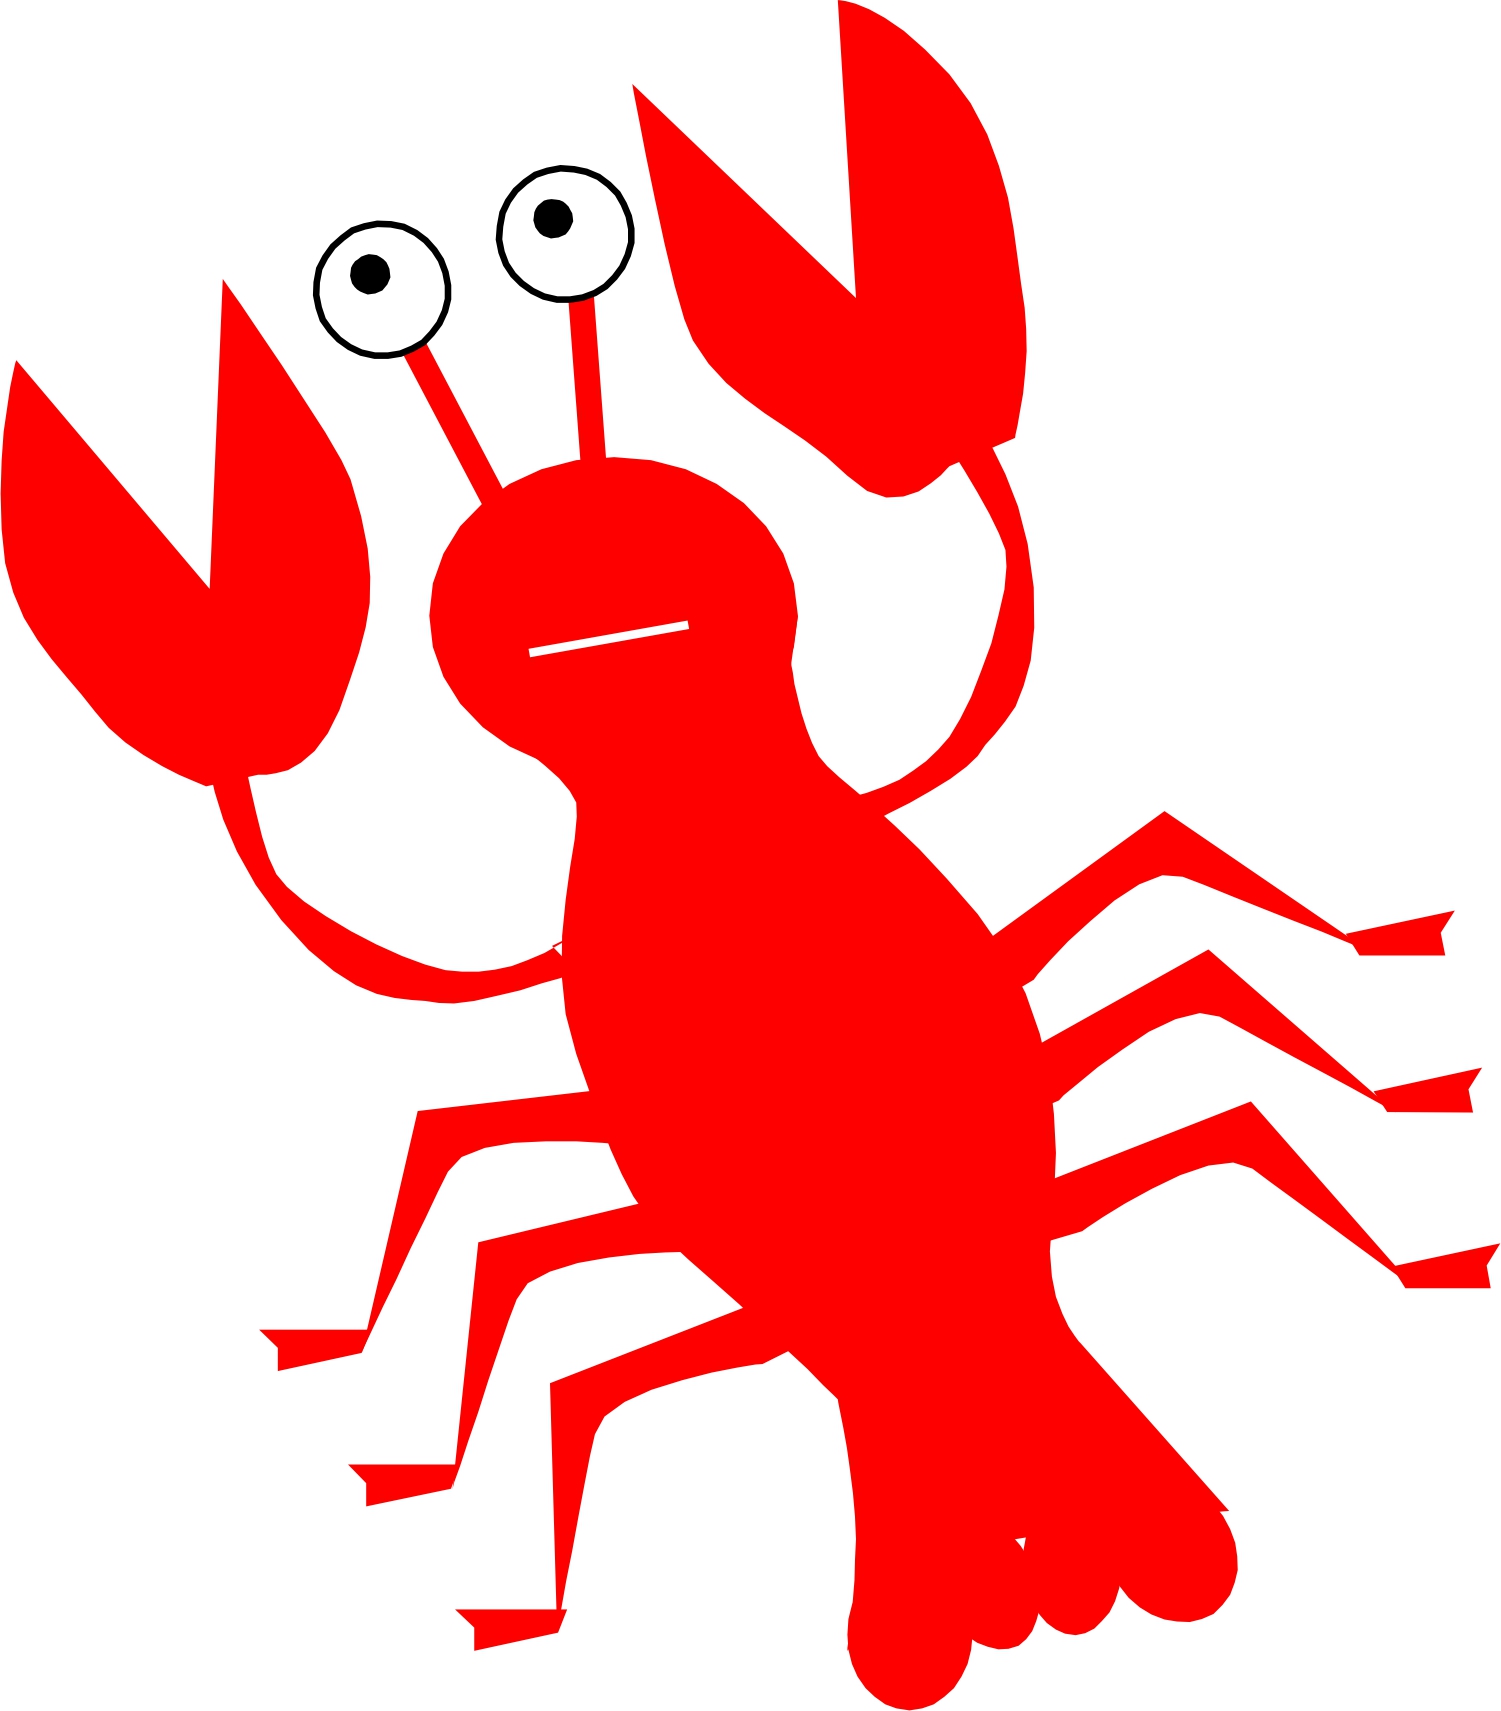 Lobster Clip Art Or Cartoons | Clipart Panda - Free Clipart Images